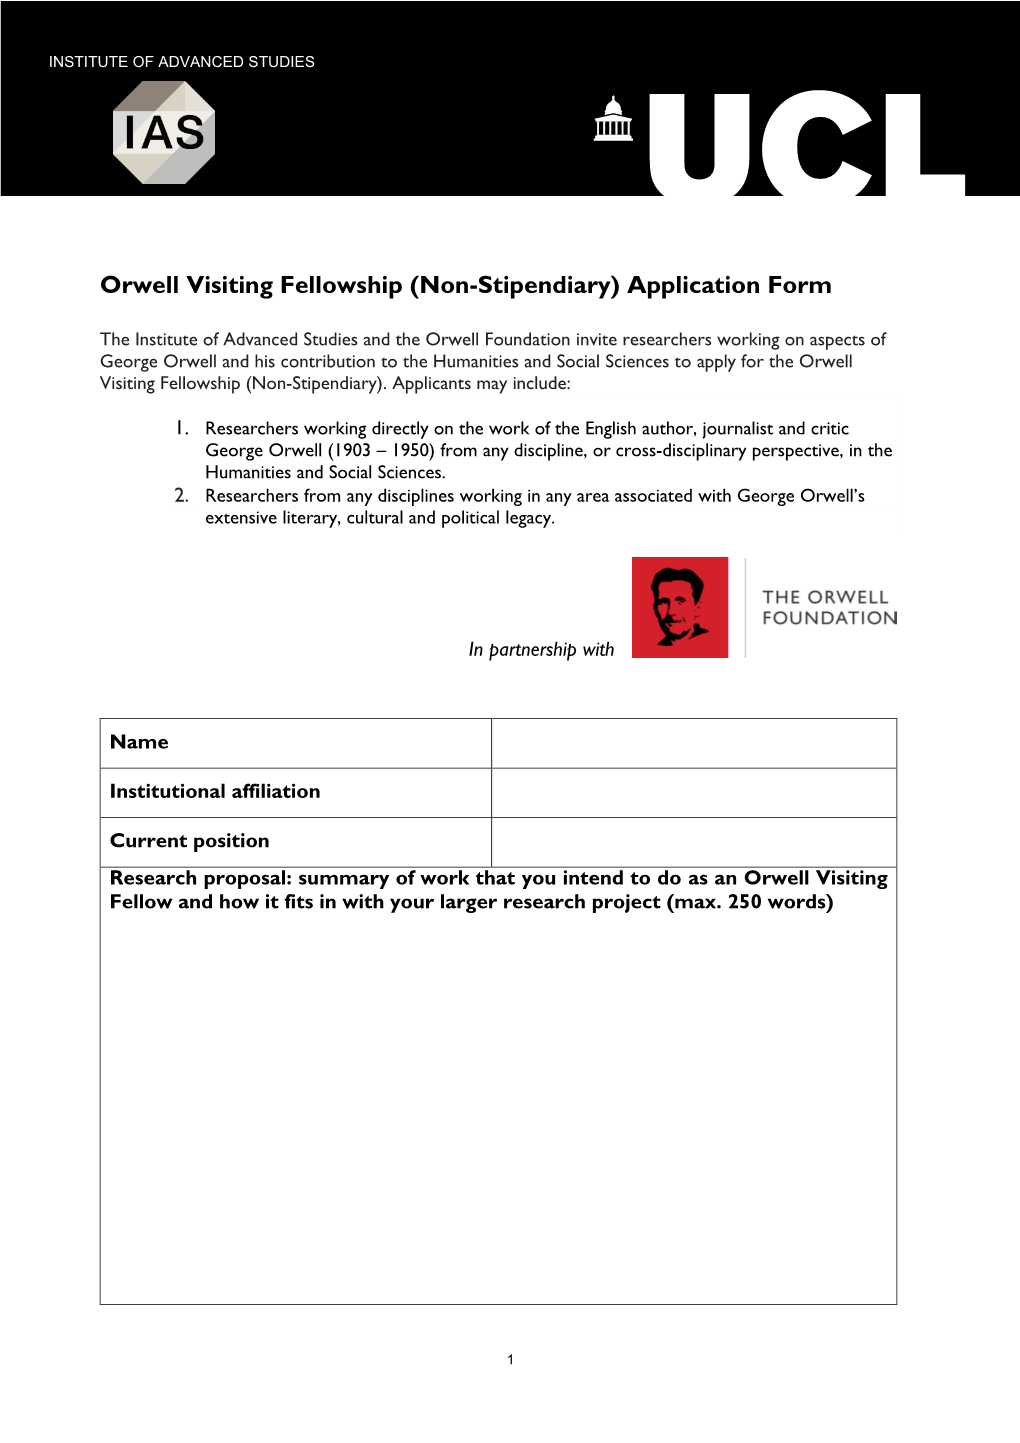 Non-Stipendiary) Application Form